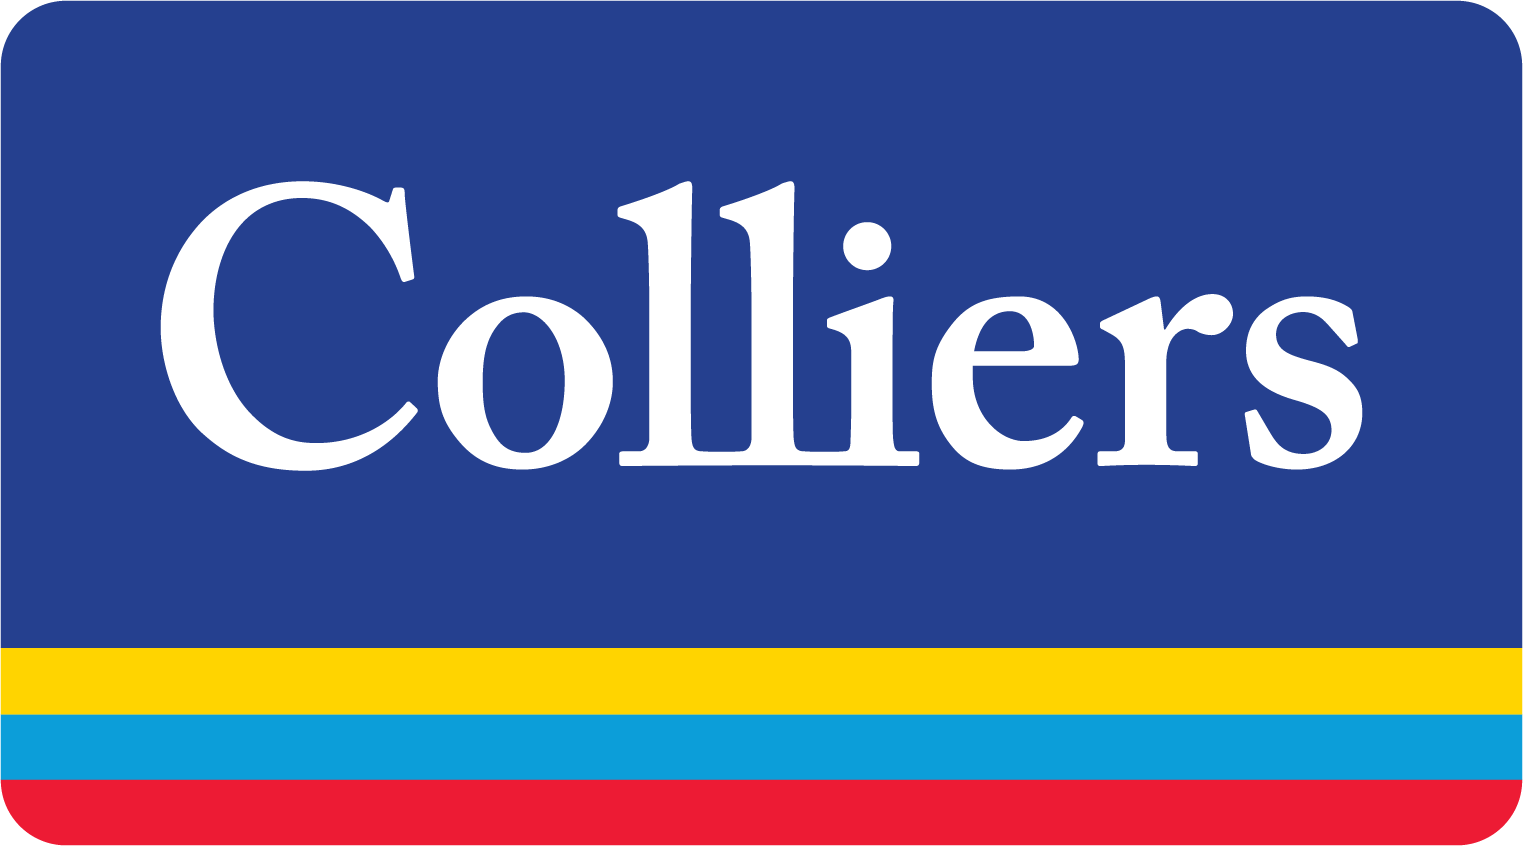 Colliers International EMEA